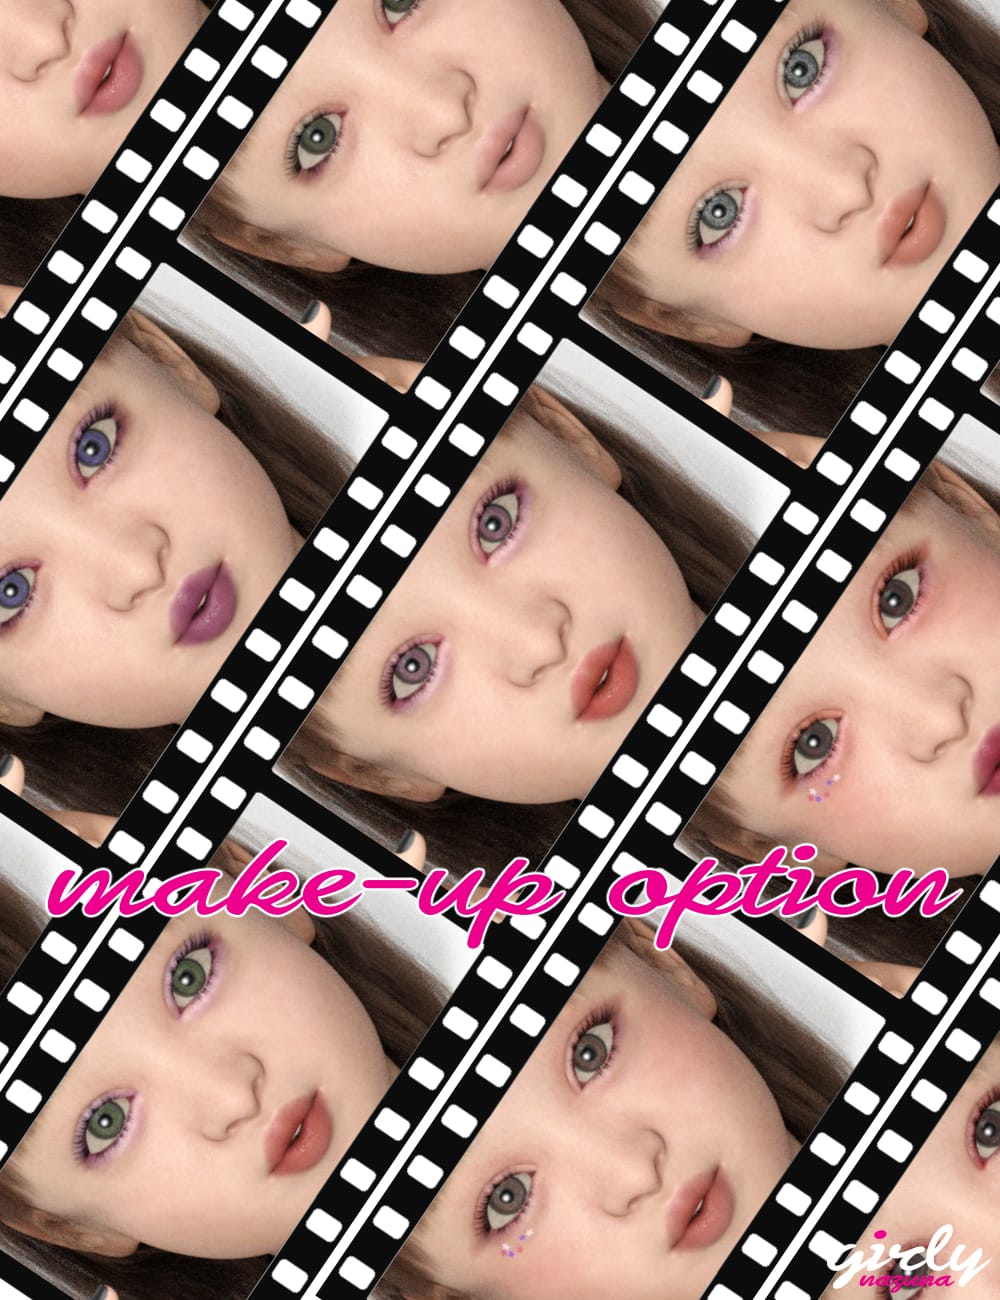 Girly Nazuna for Genesis 8 Female by: 7-ko, 3D Models by Daz 3D